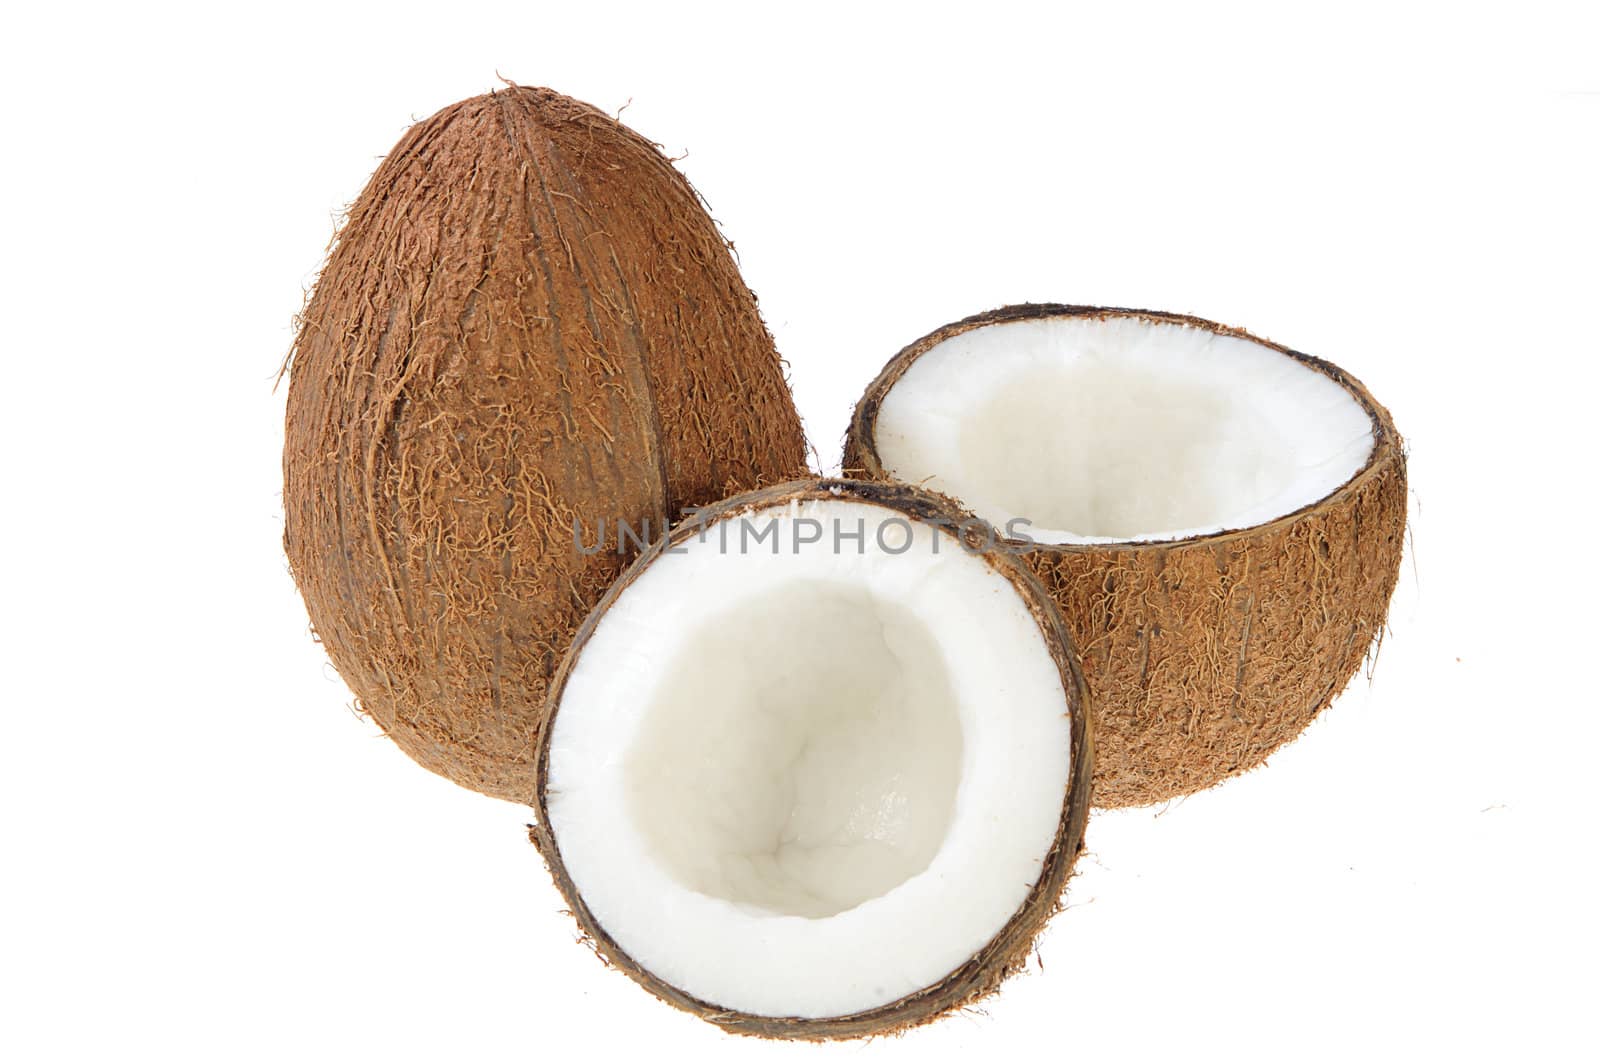 Broken coconut on white background